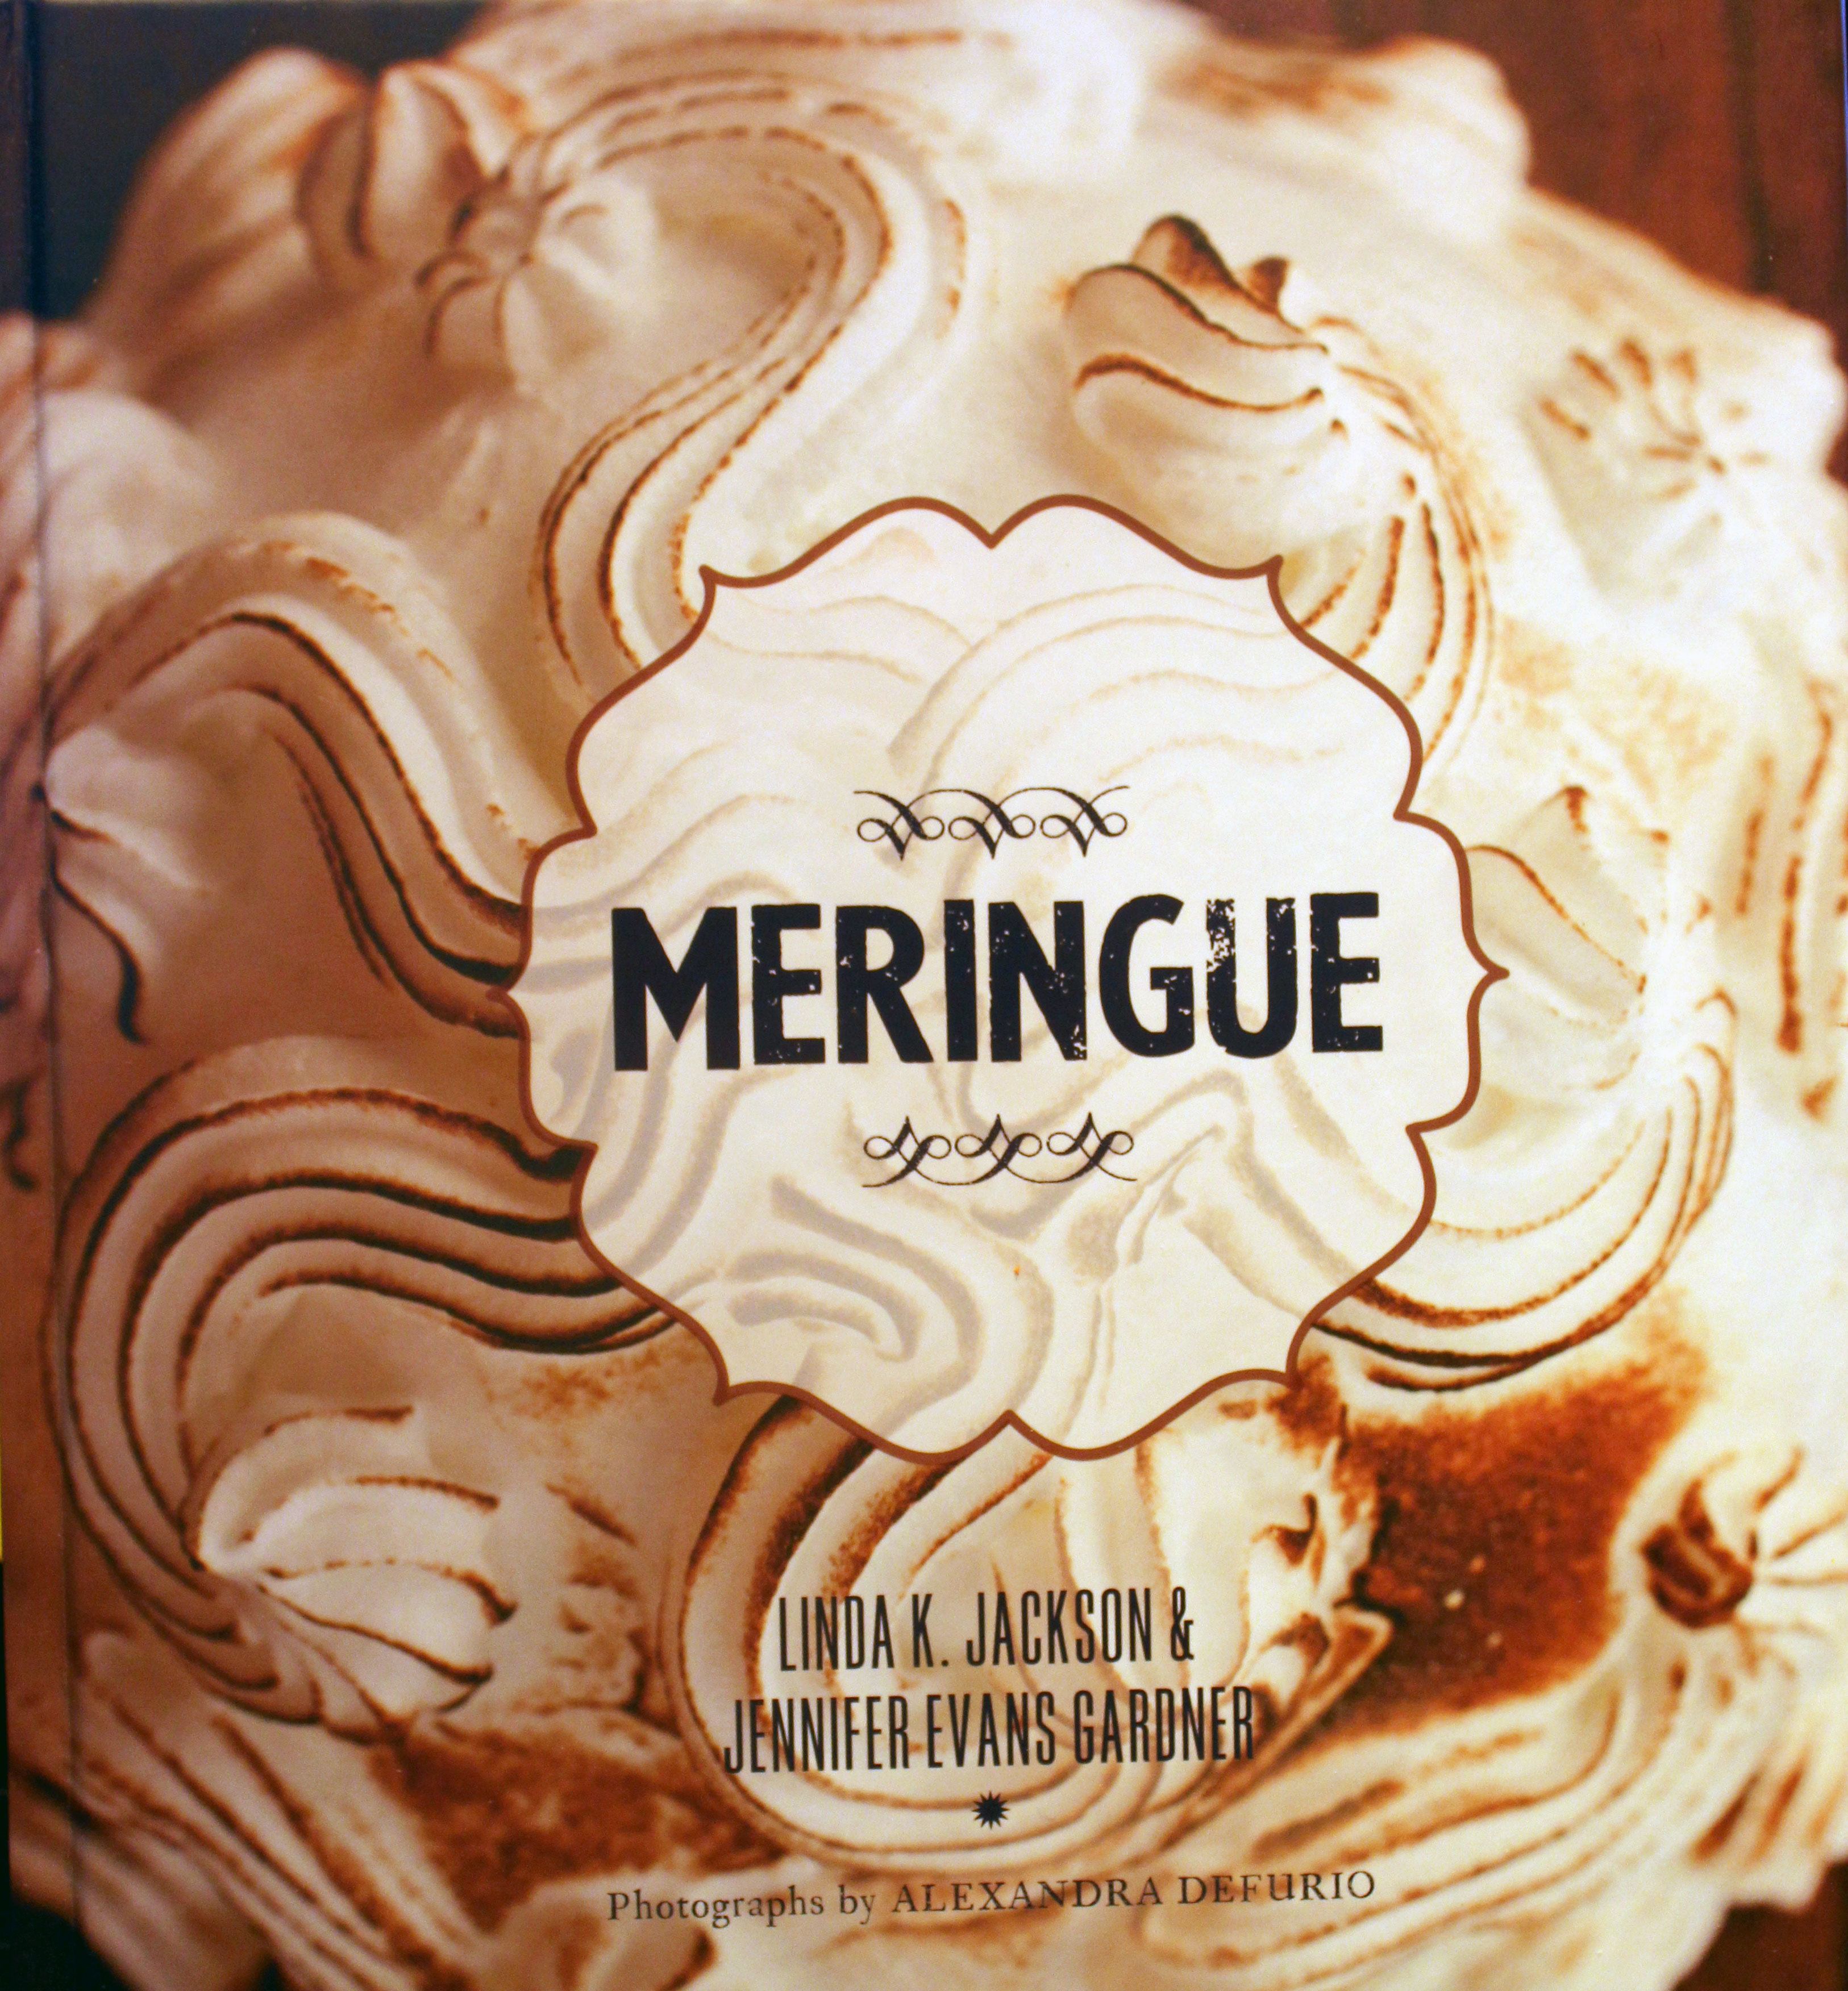 TBT Cookbook Review: Meringue